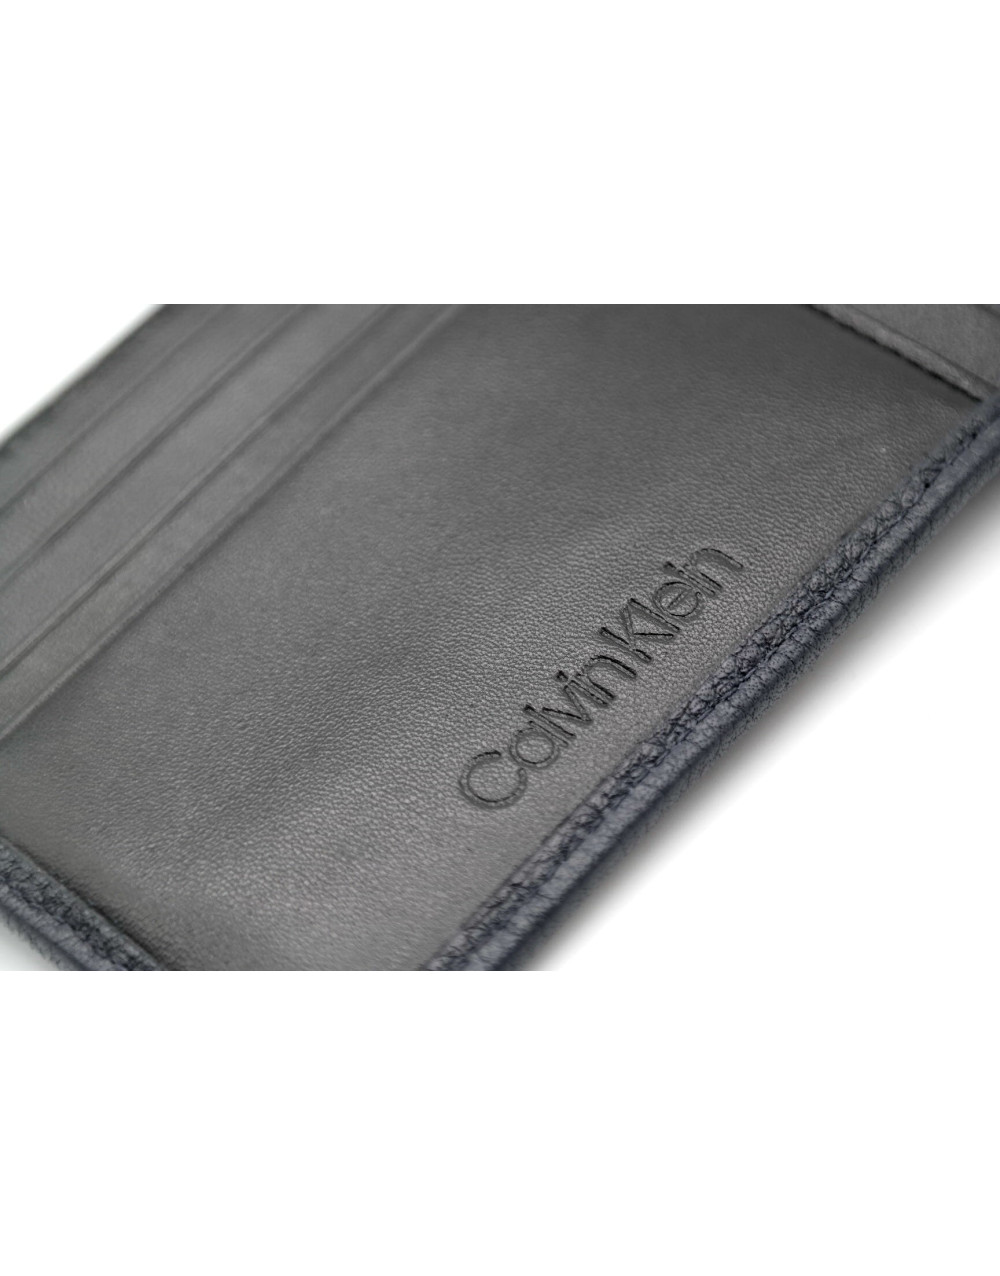 CALVIN KLEIN men's wallet navy blue card leather | Grishop | Gallantry and  accessories